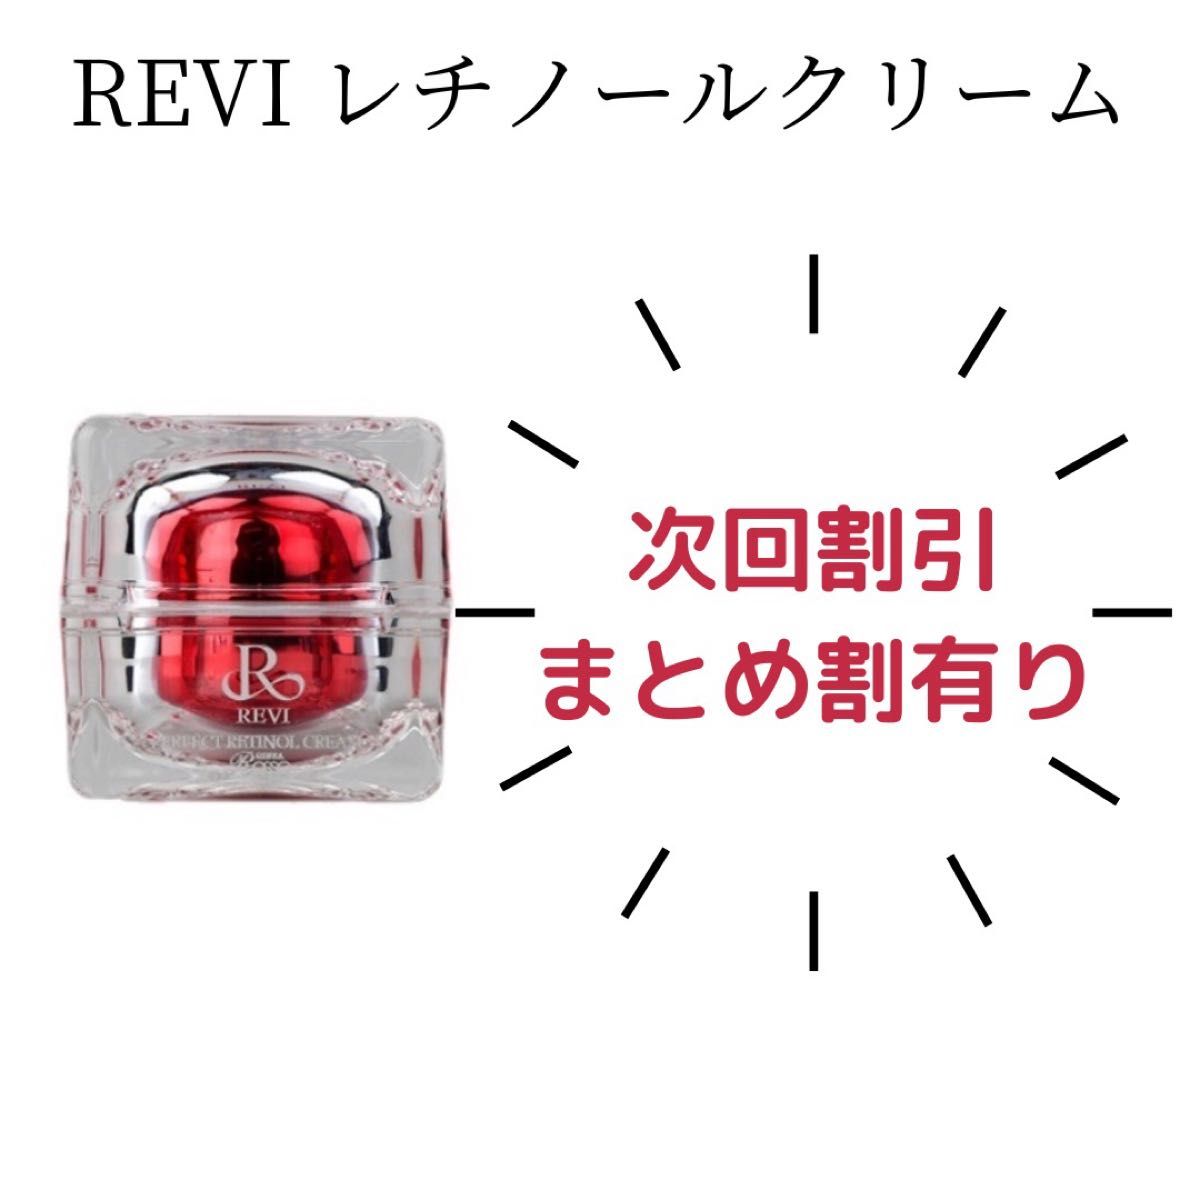 REVI パーフェクトレチノールクリーム - ruizvillandiego.com